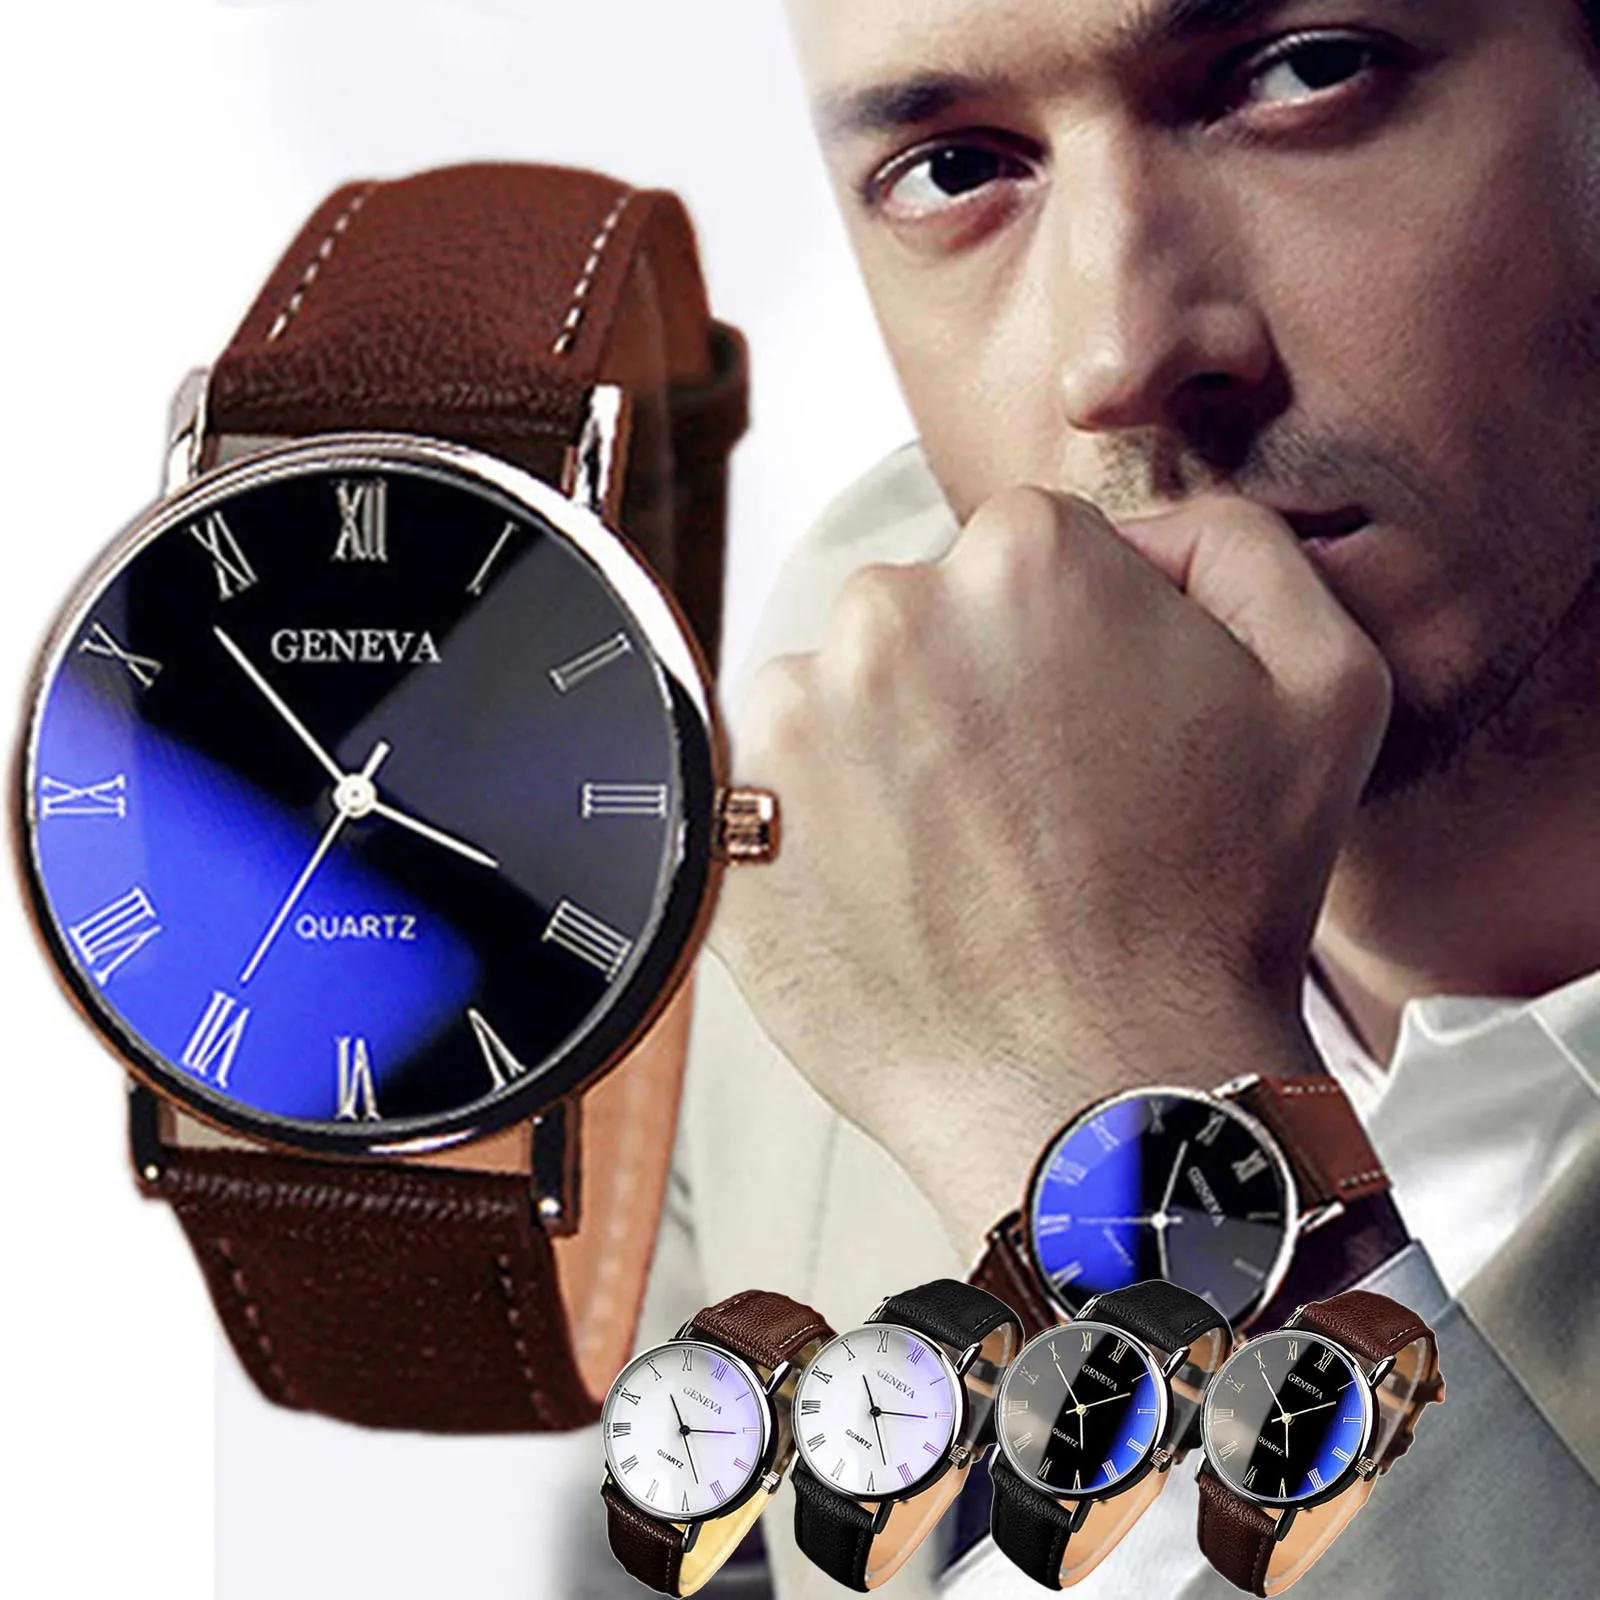 

Fashion Men's Watches Belt Watch Blu-ray Roman Leather Military Sports Analog Quartz Wrist Watch for men reloj hombre 2021